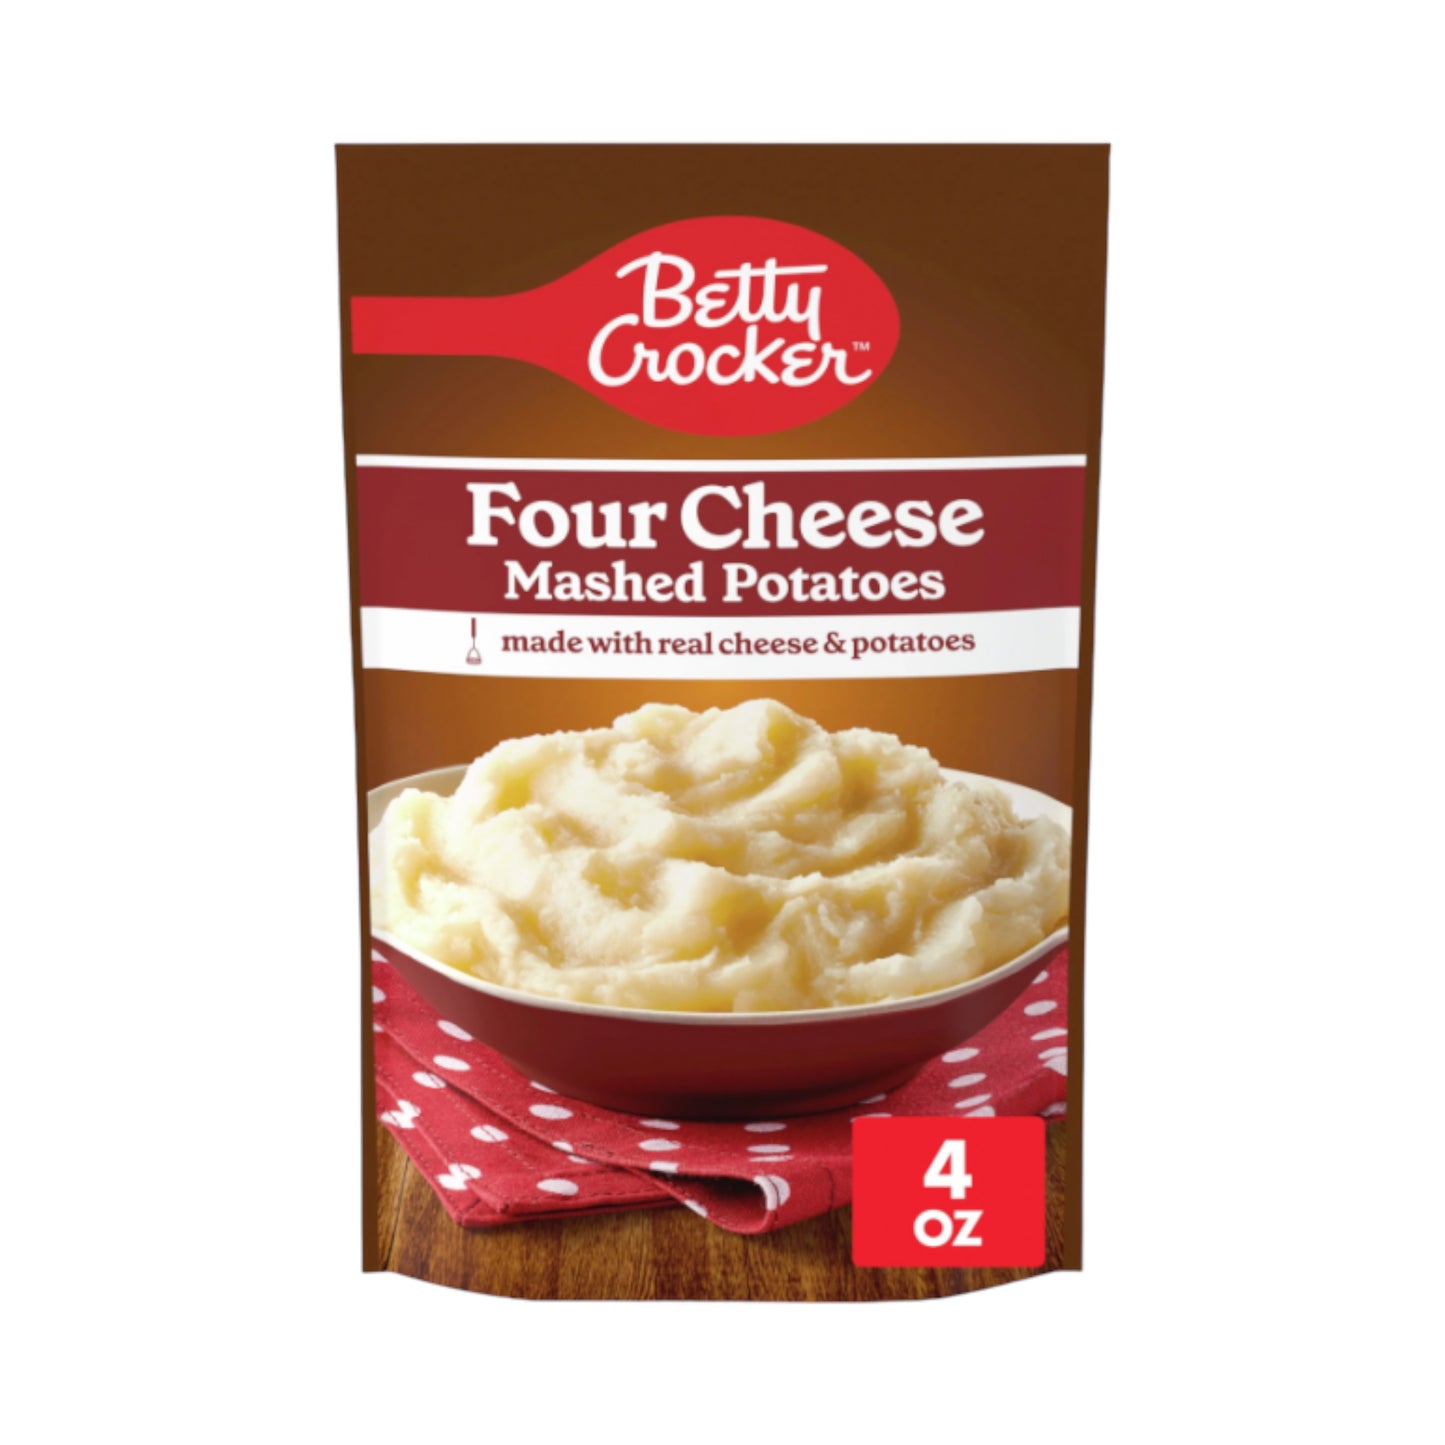 Betty Crocker Four Cheese Mashed Potatoes - 4oz (113g)